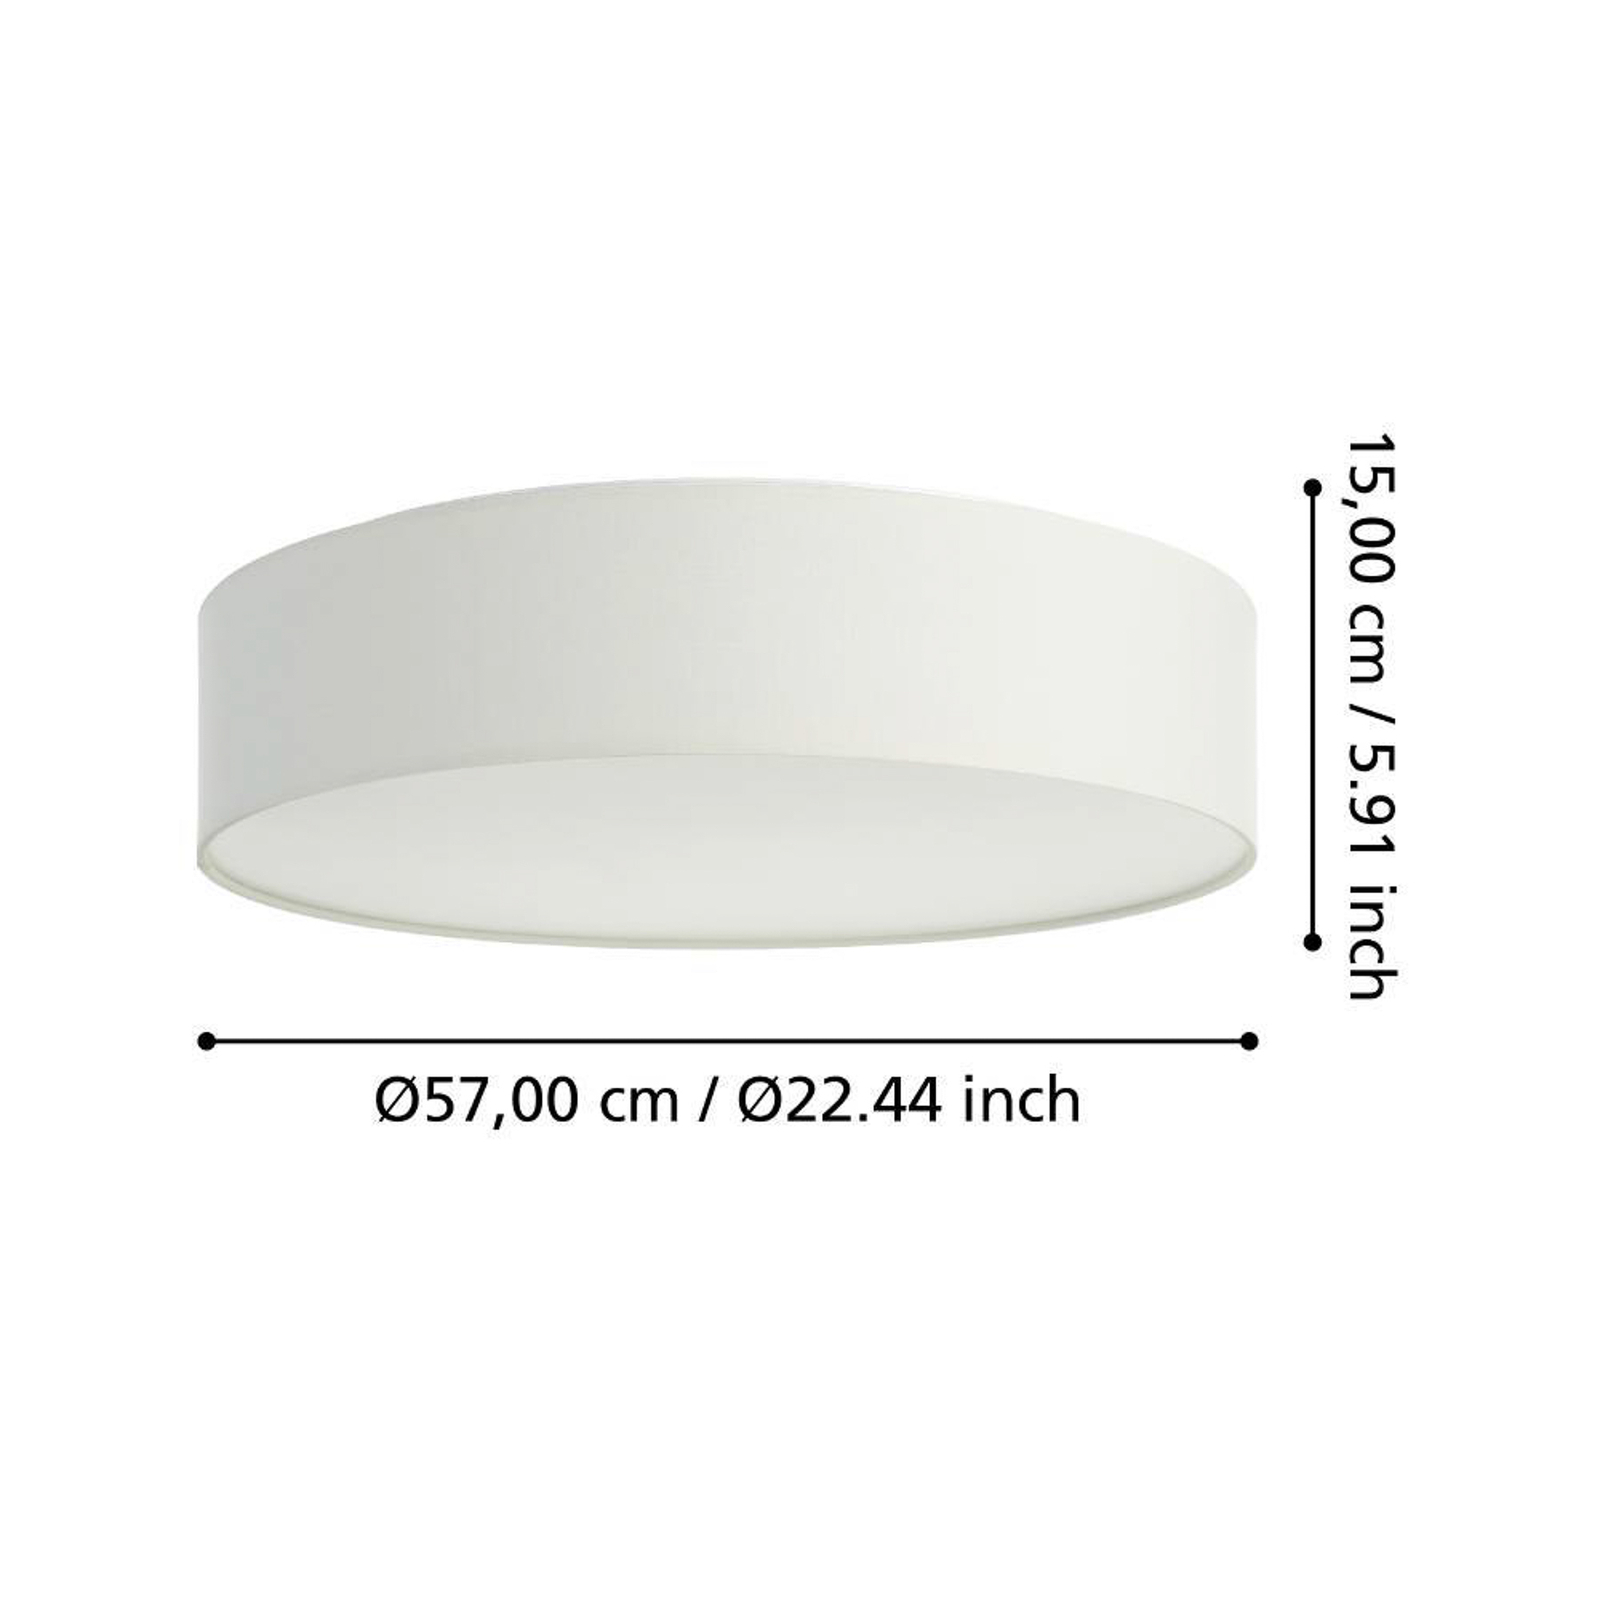 EGLO connect Romao-Z plafonnier LED, Ø57 cm, blanc